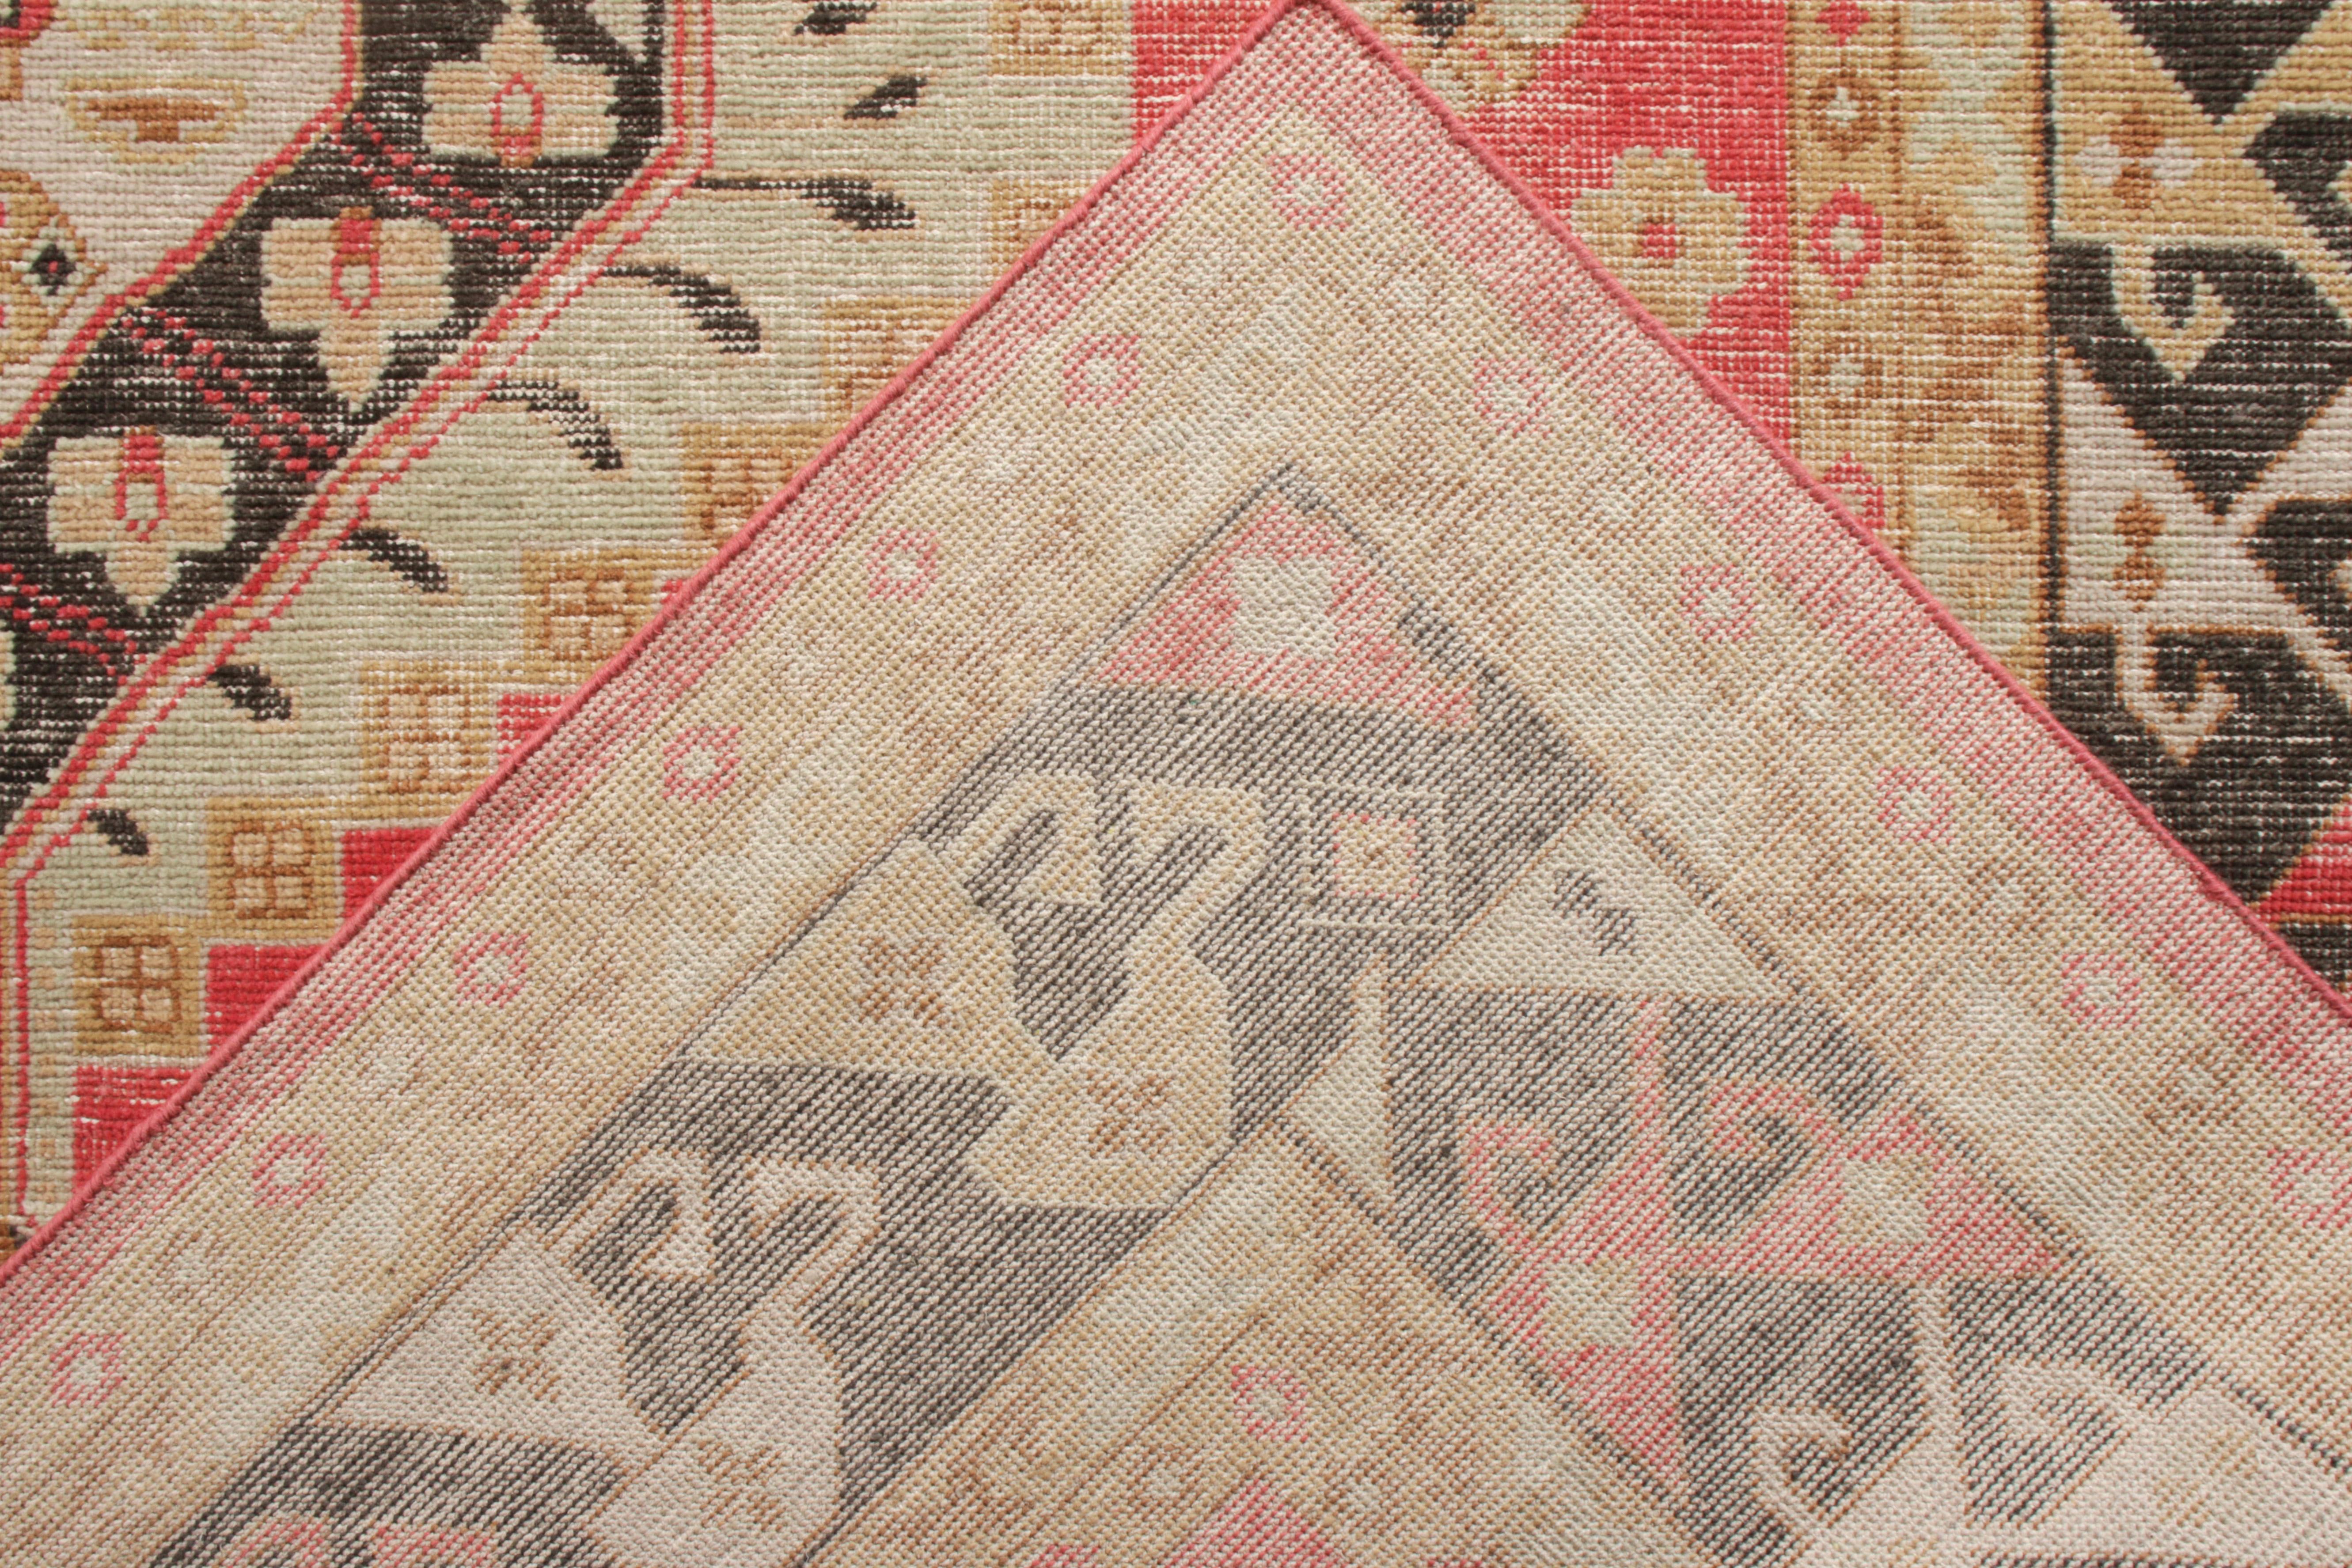 Rug & Kilim's Distressed Classic Style Teppich in Rot, Beige-Braun mit Medaillon-Muster (Handgeknüpft) im Angebot